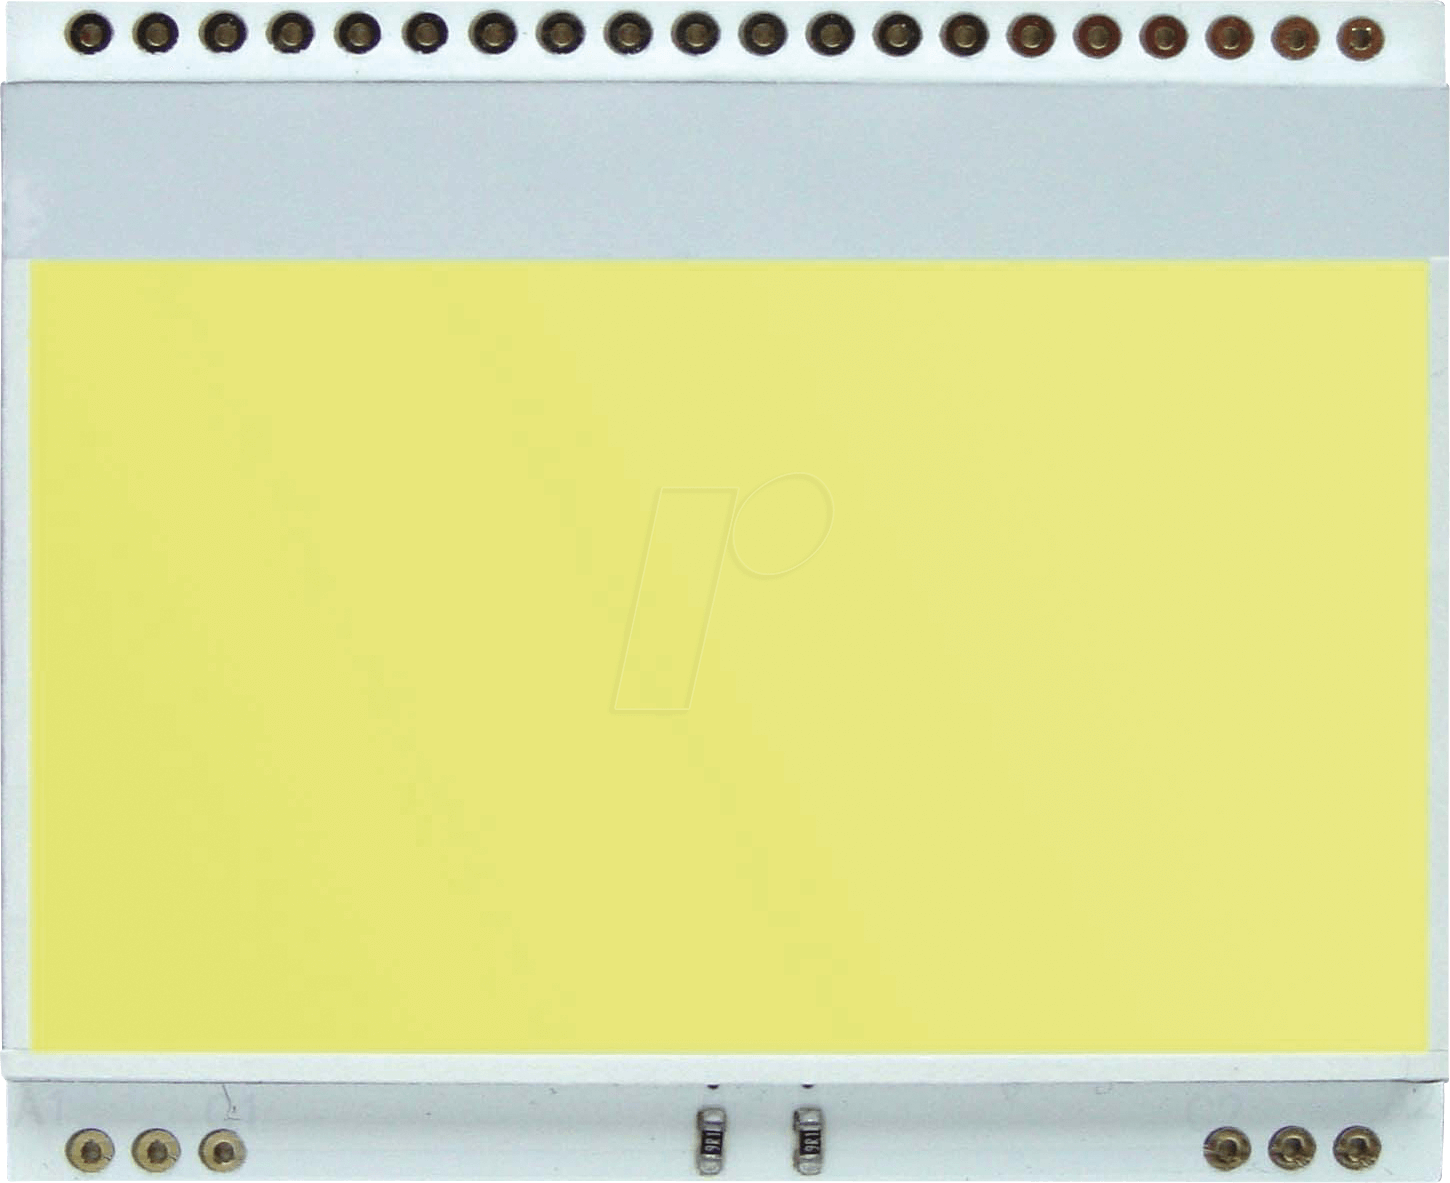 EA LED55X46-G - LED-Beleuchtung für EA DOGM128, 52 x 32 mm, gelb / grün von DISPLAY VISIONS